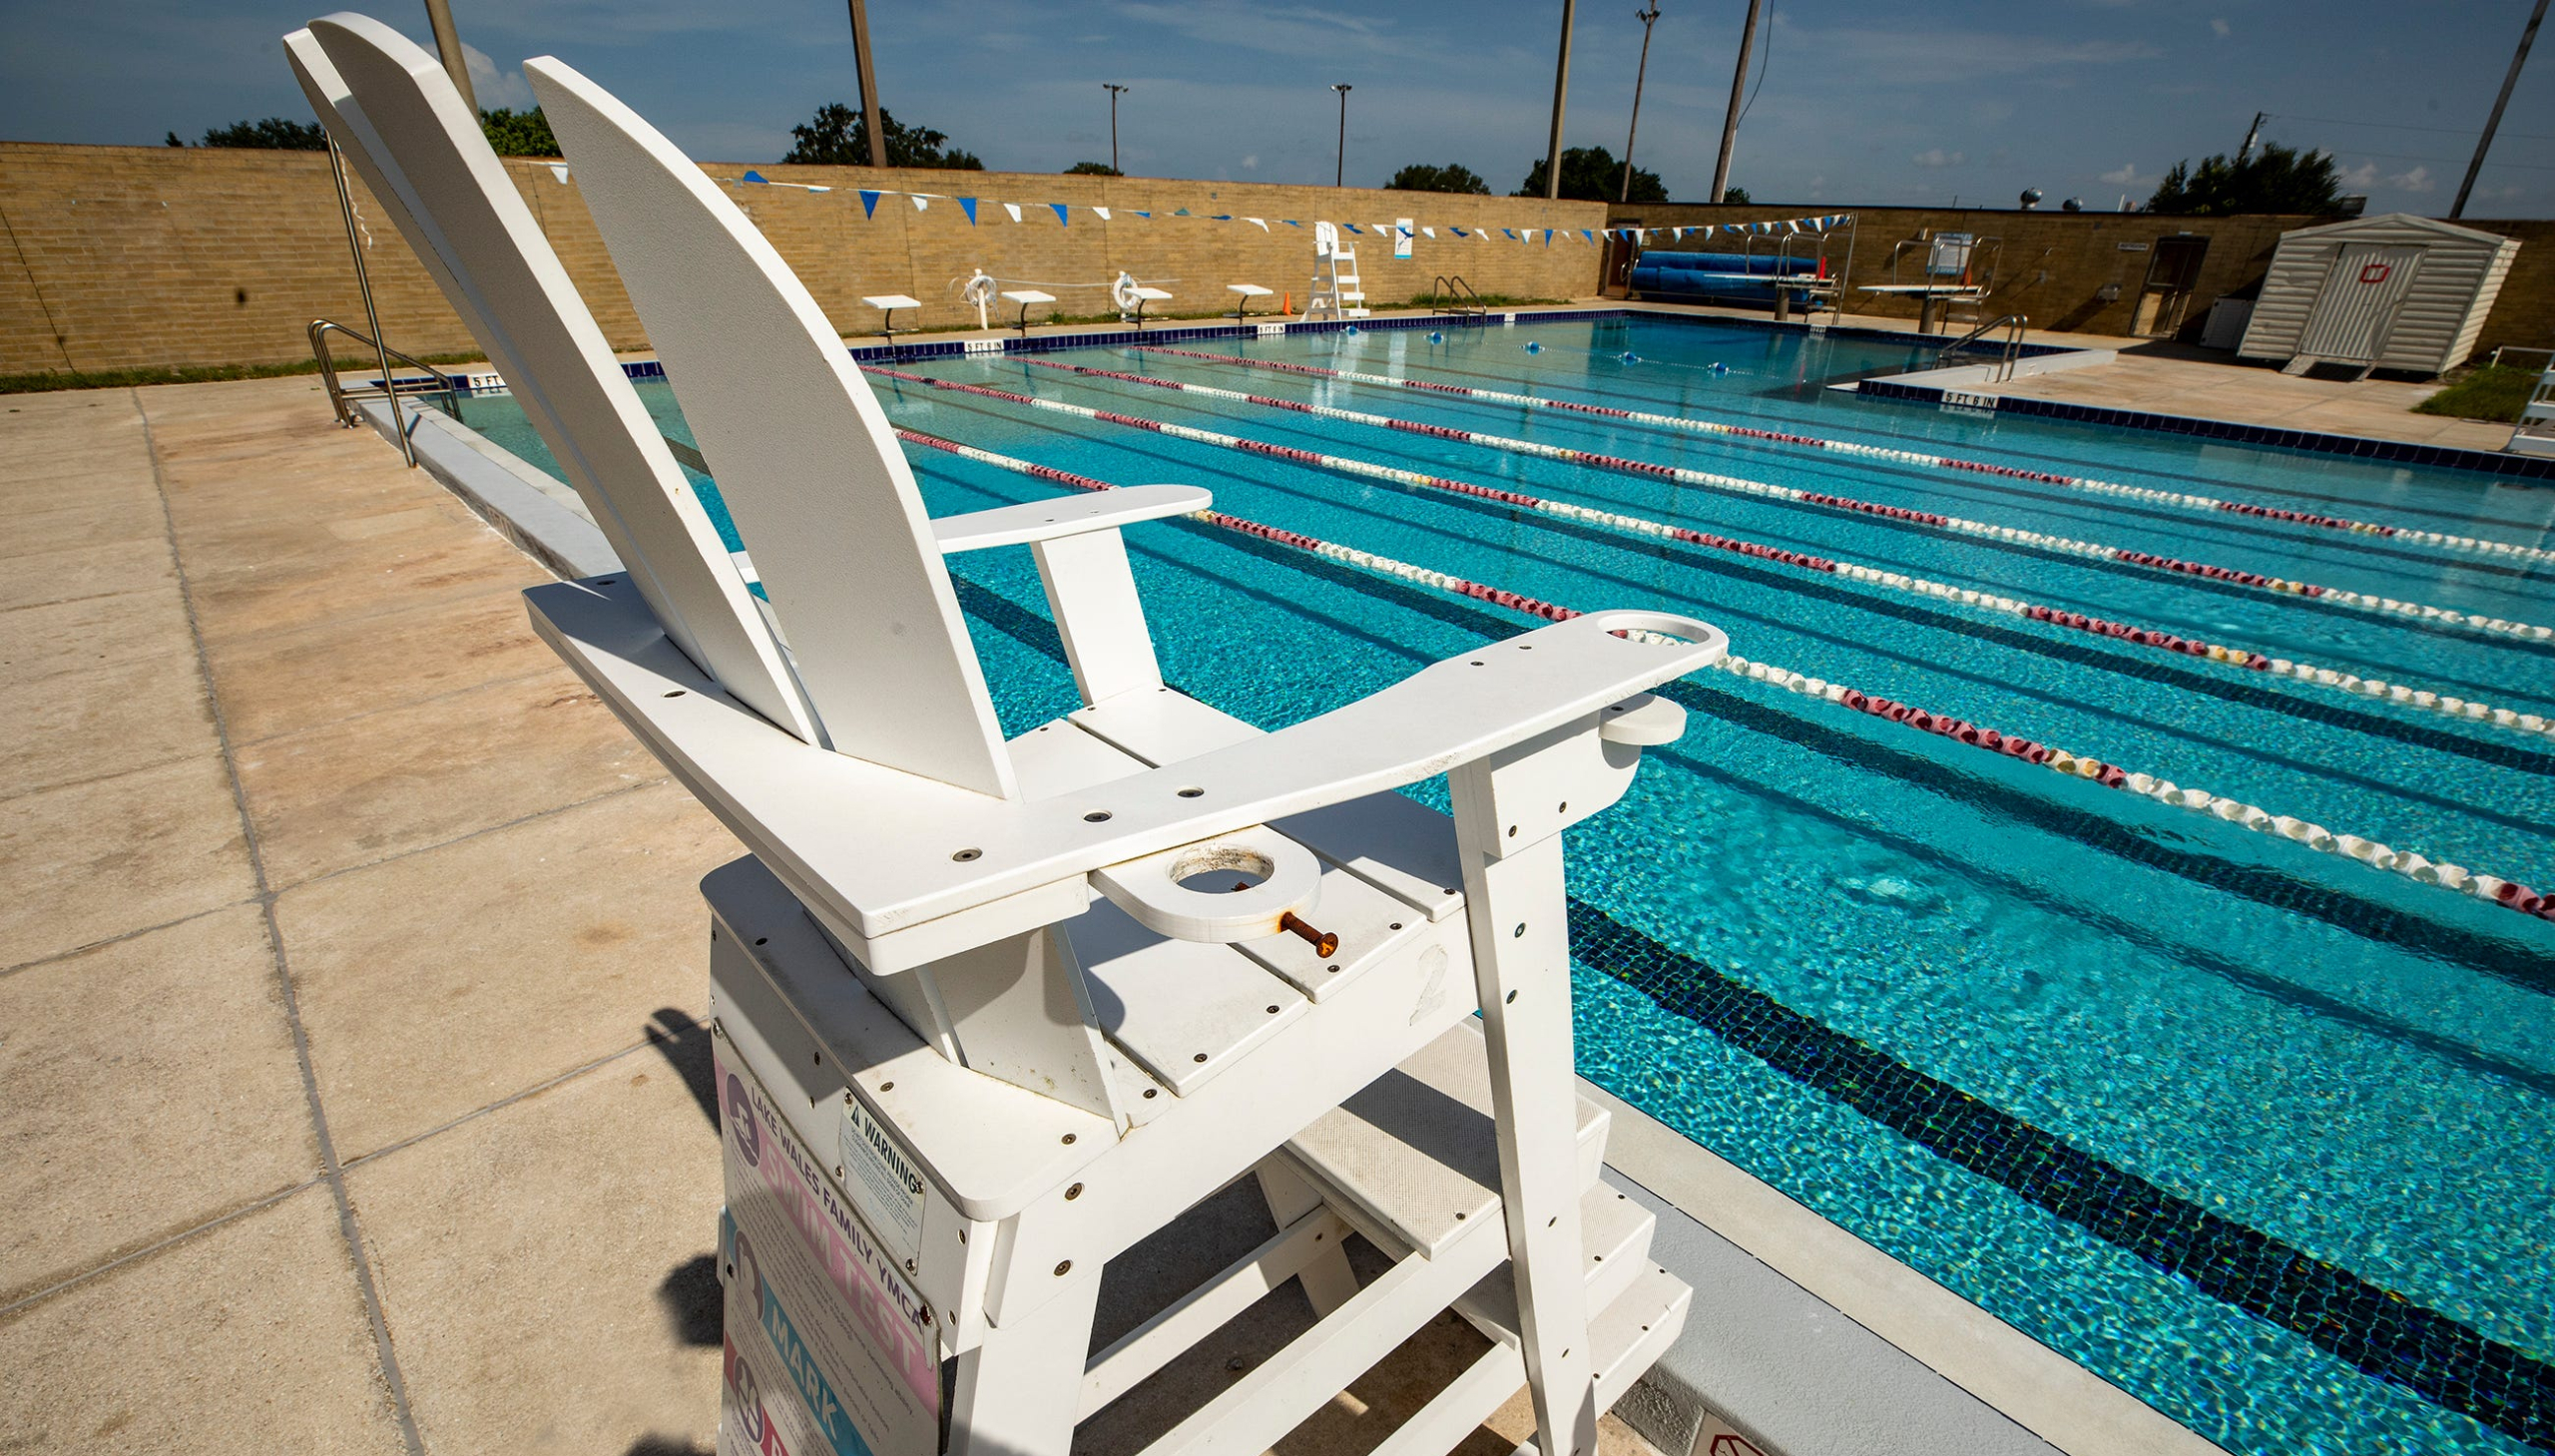 Chicago’s public pools will open for the season on Monda